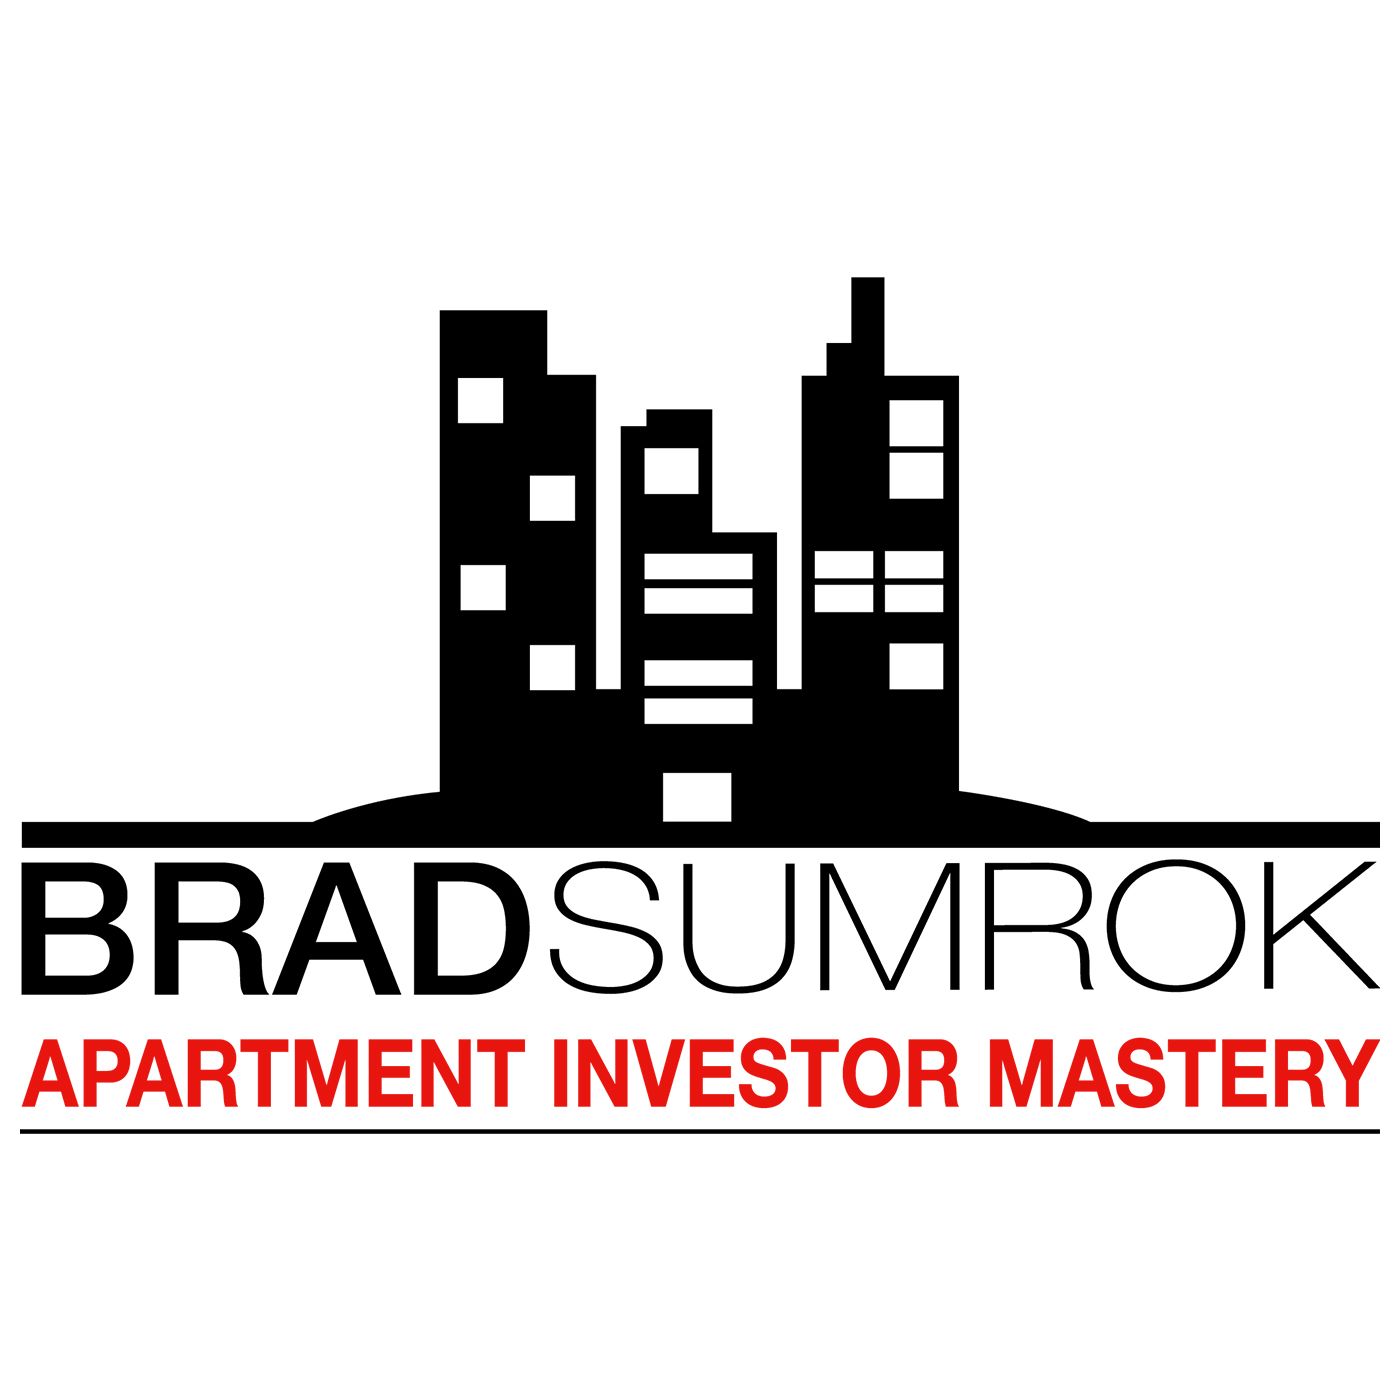 Brad sumrok apartment investing mentor vegas pga betting lines